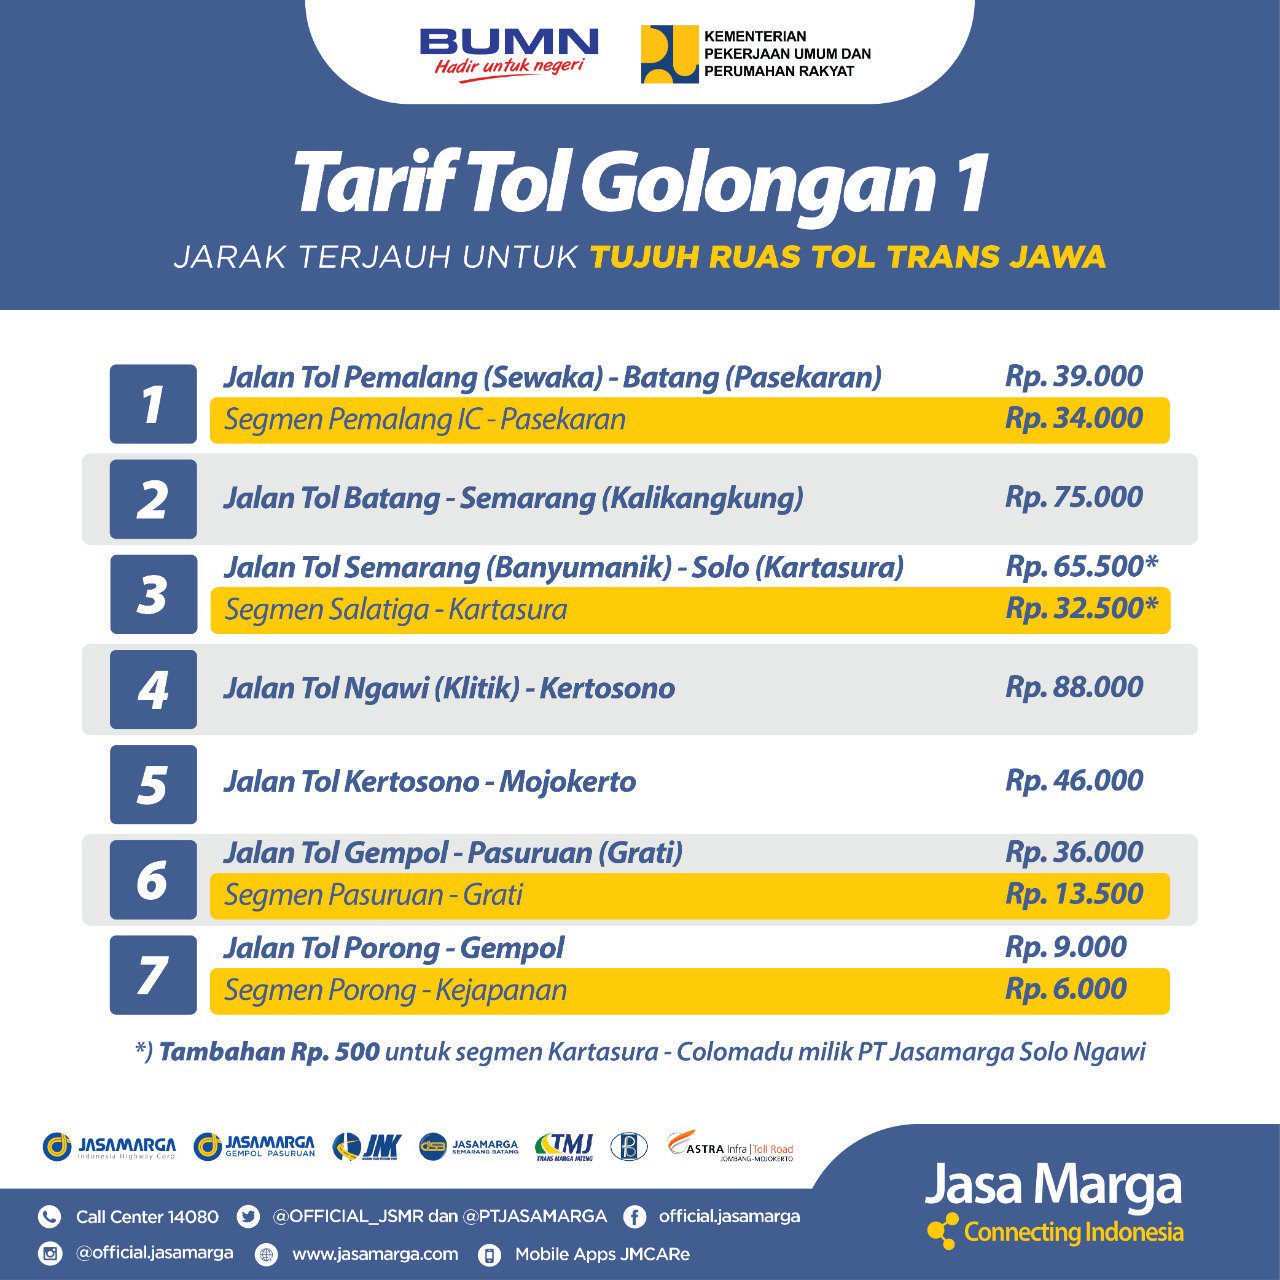 Tujuh Ruas Tol Trans Jawa, Tarif Resmi Mulai Berlaku 21 Januari 2019